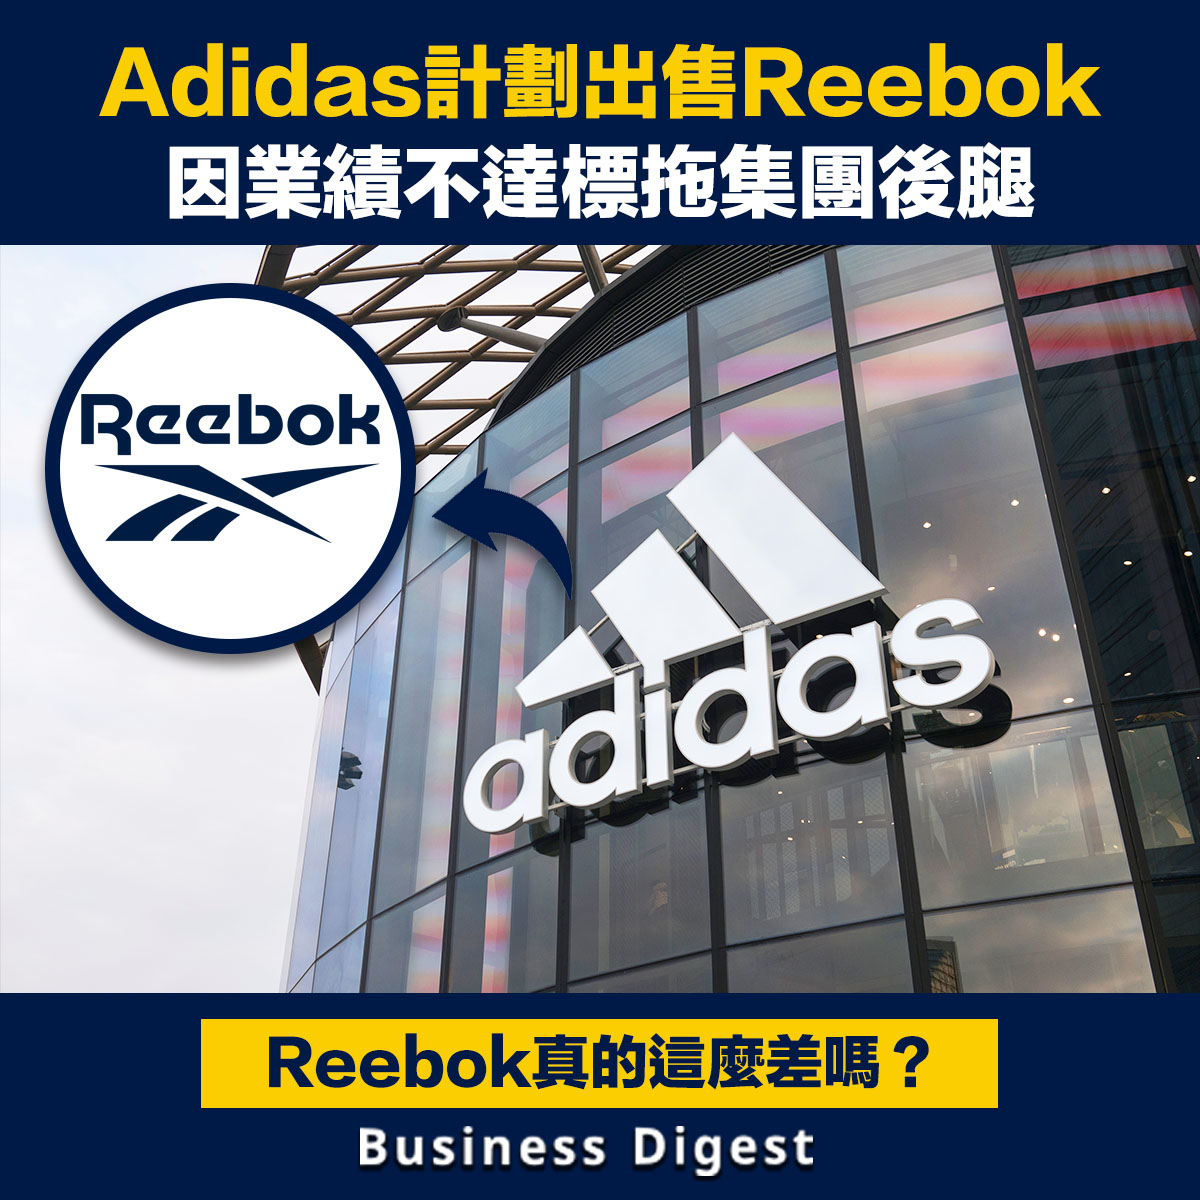 Adidas計劃出售Reebok，因業績不達標拖集團後腿